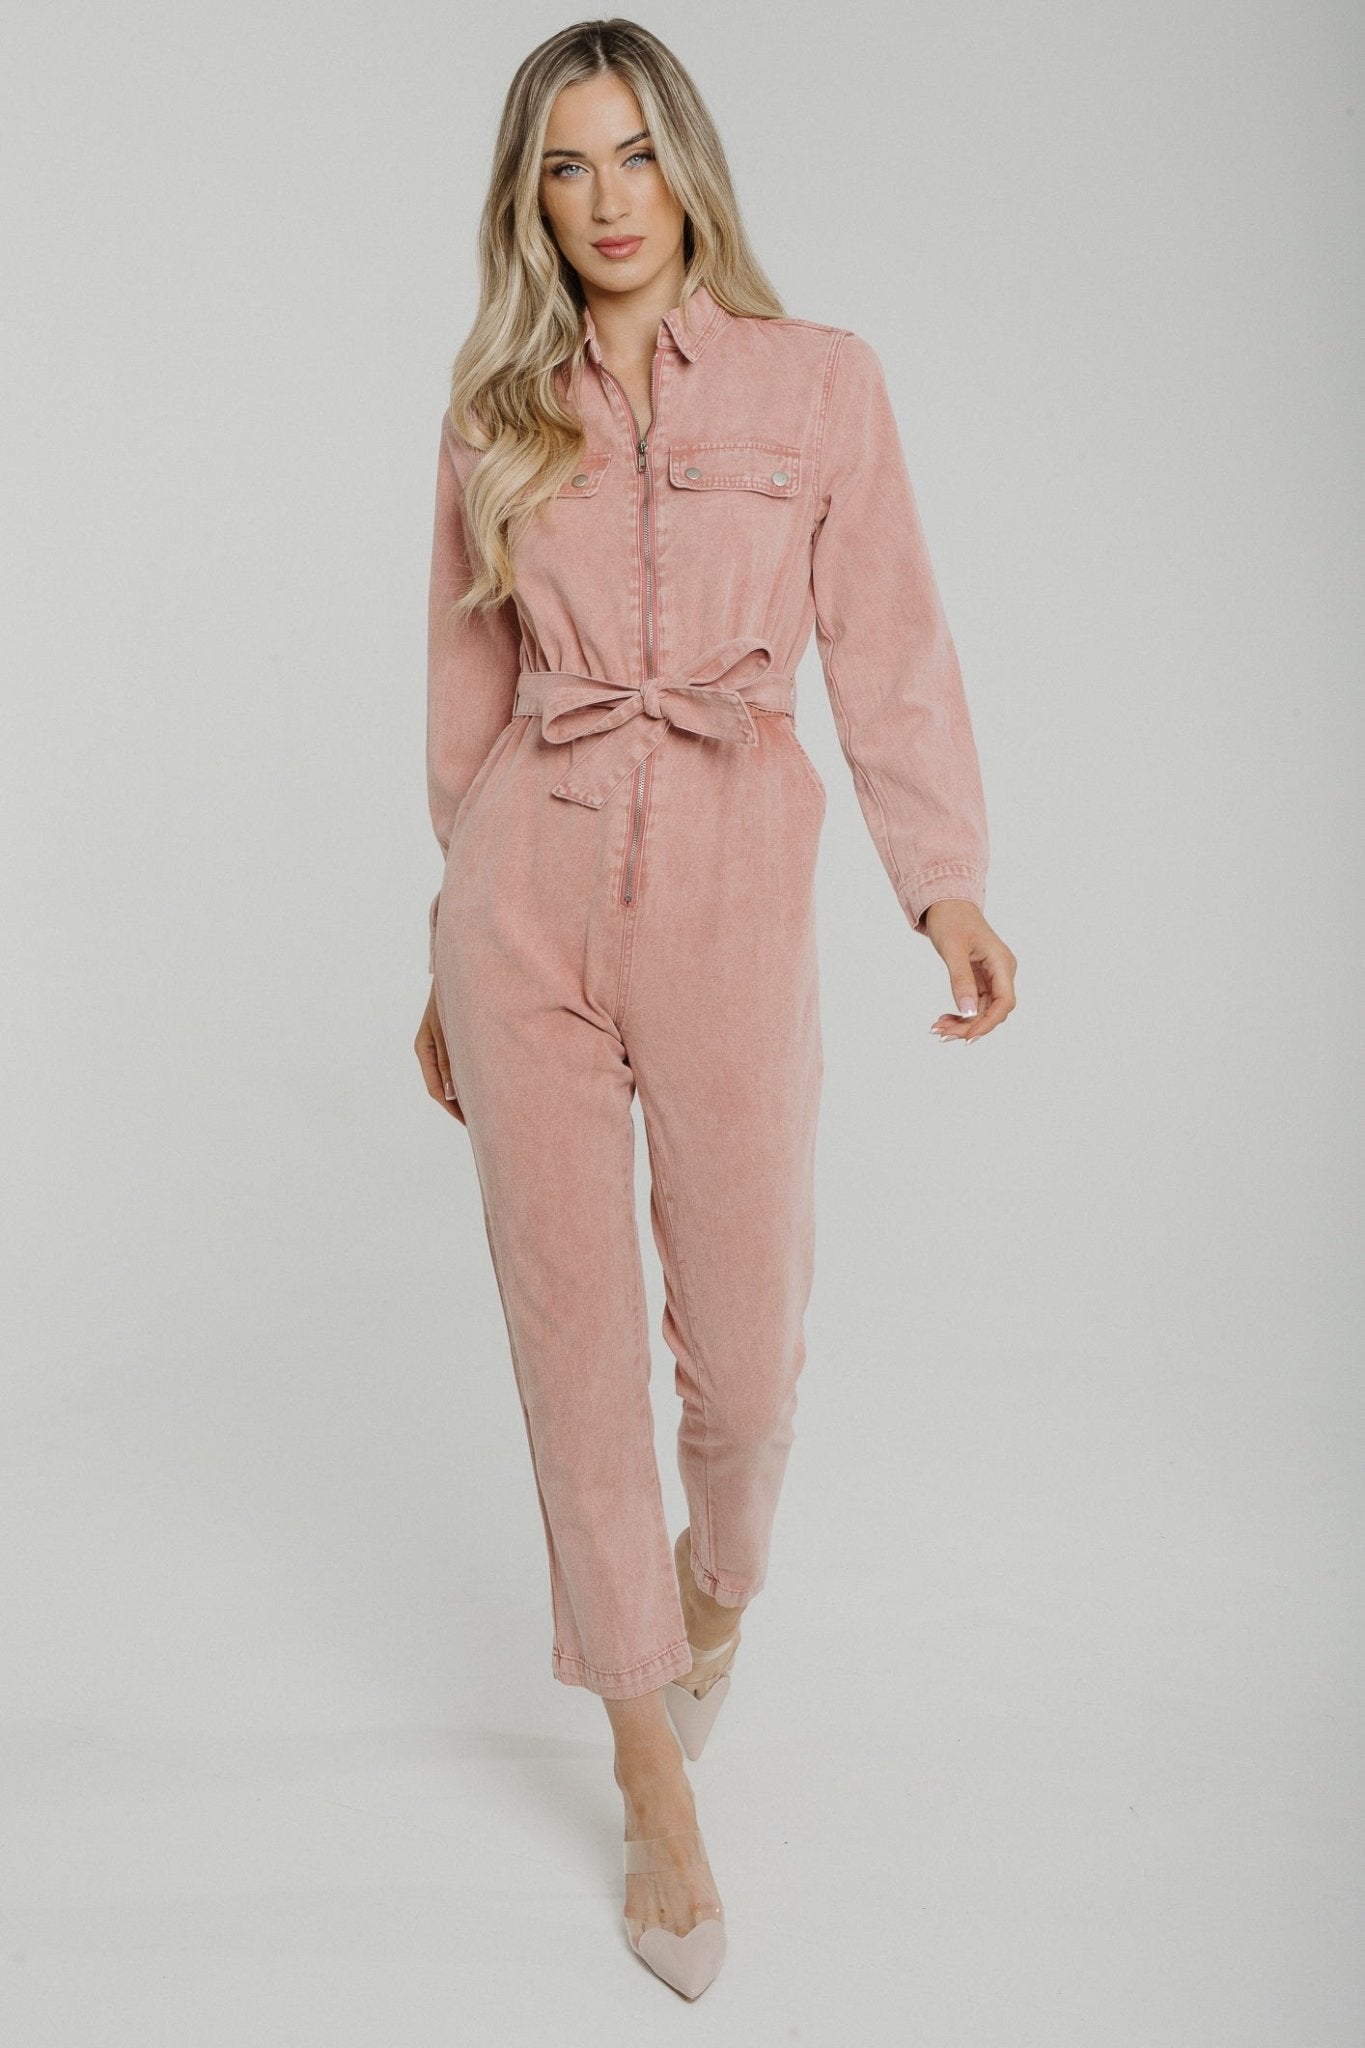 Cora Zip Front Jumpsuit In Pink - The Walk in Wardrobe